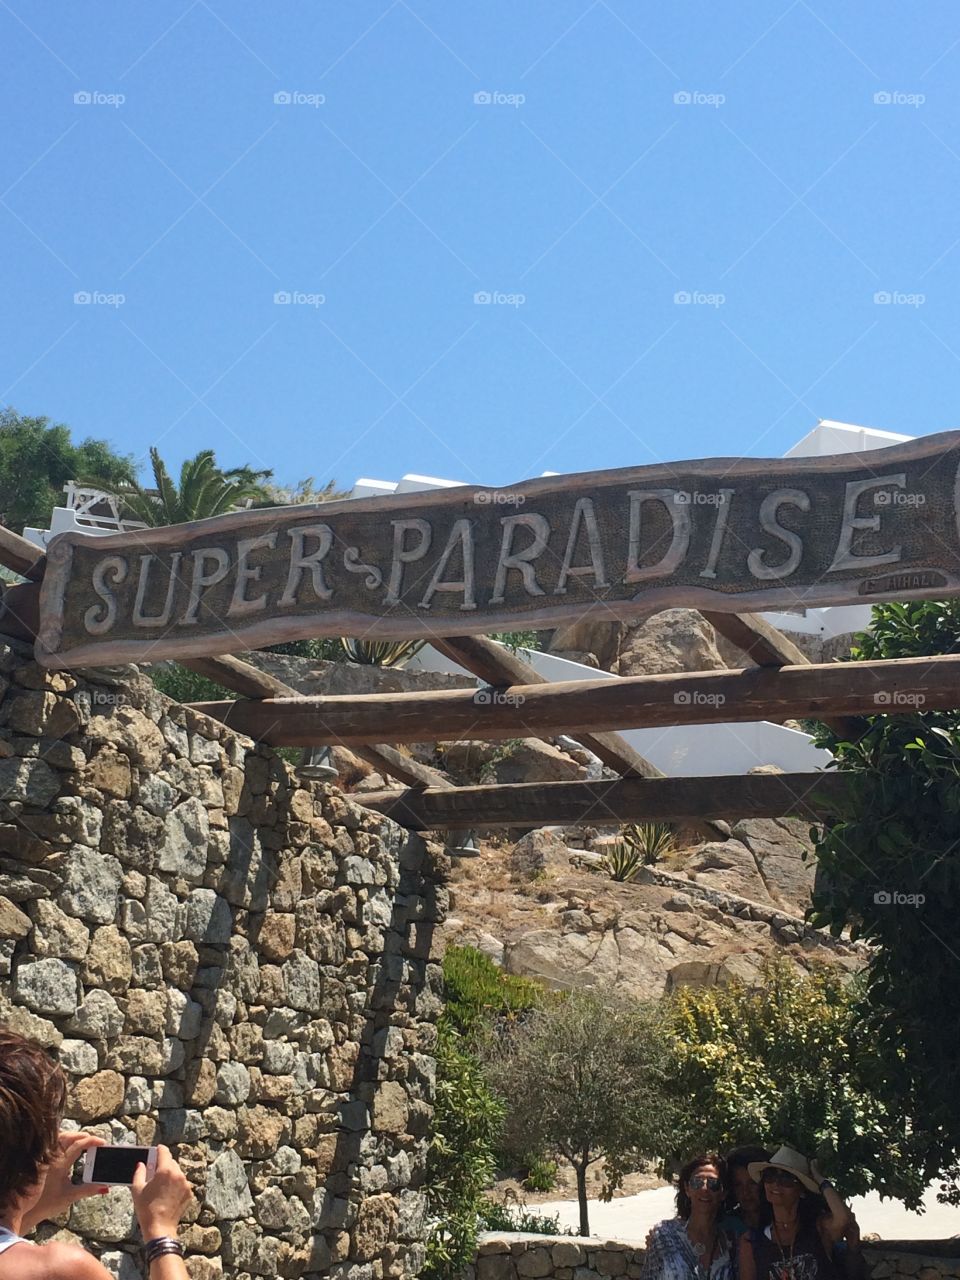 Super paradise 